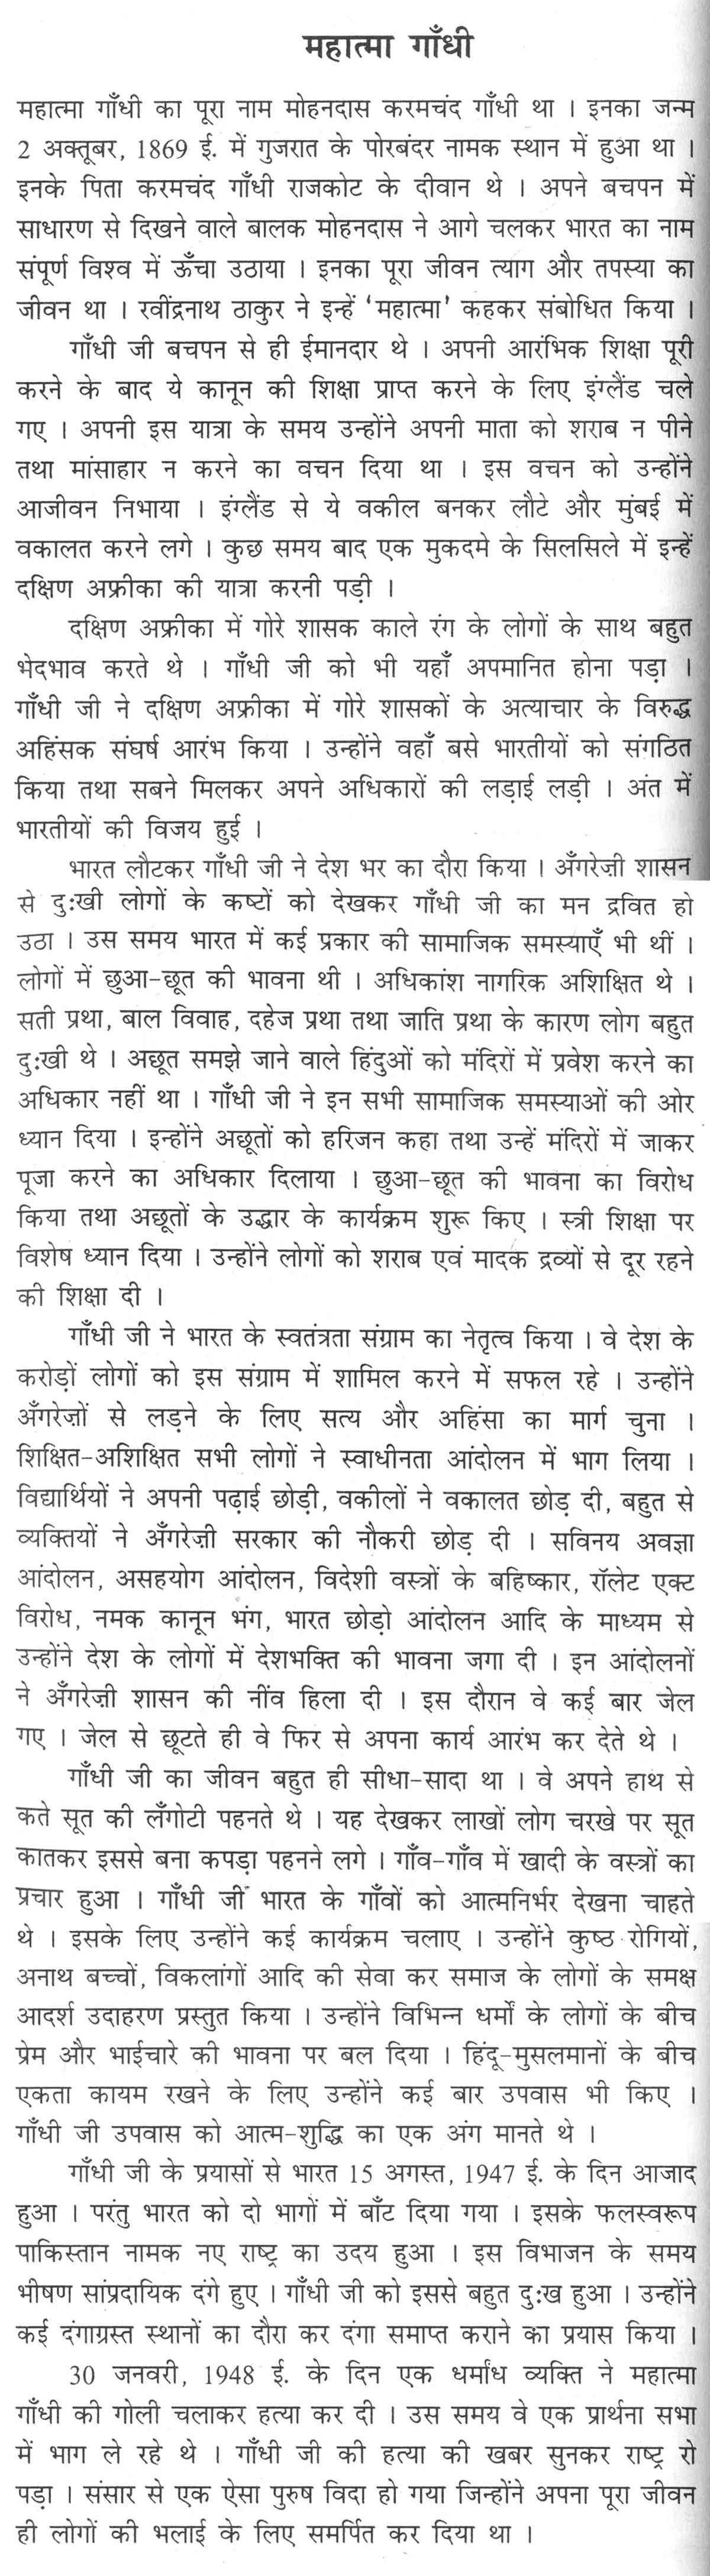 Written speech of mahatma gandhi in hindi